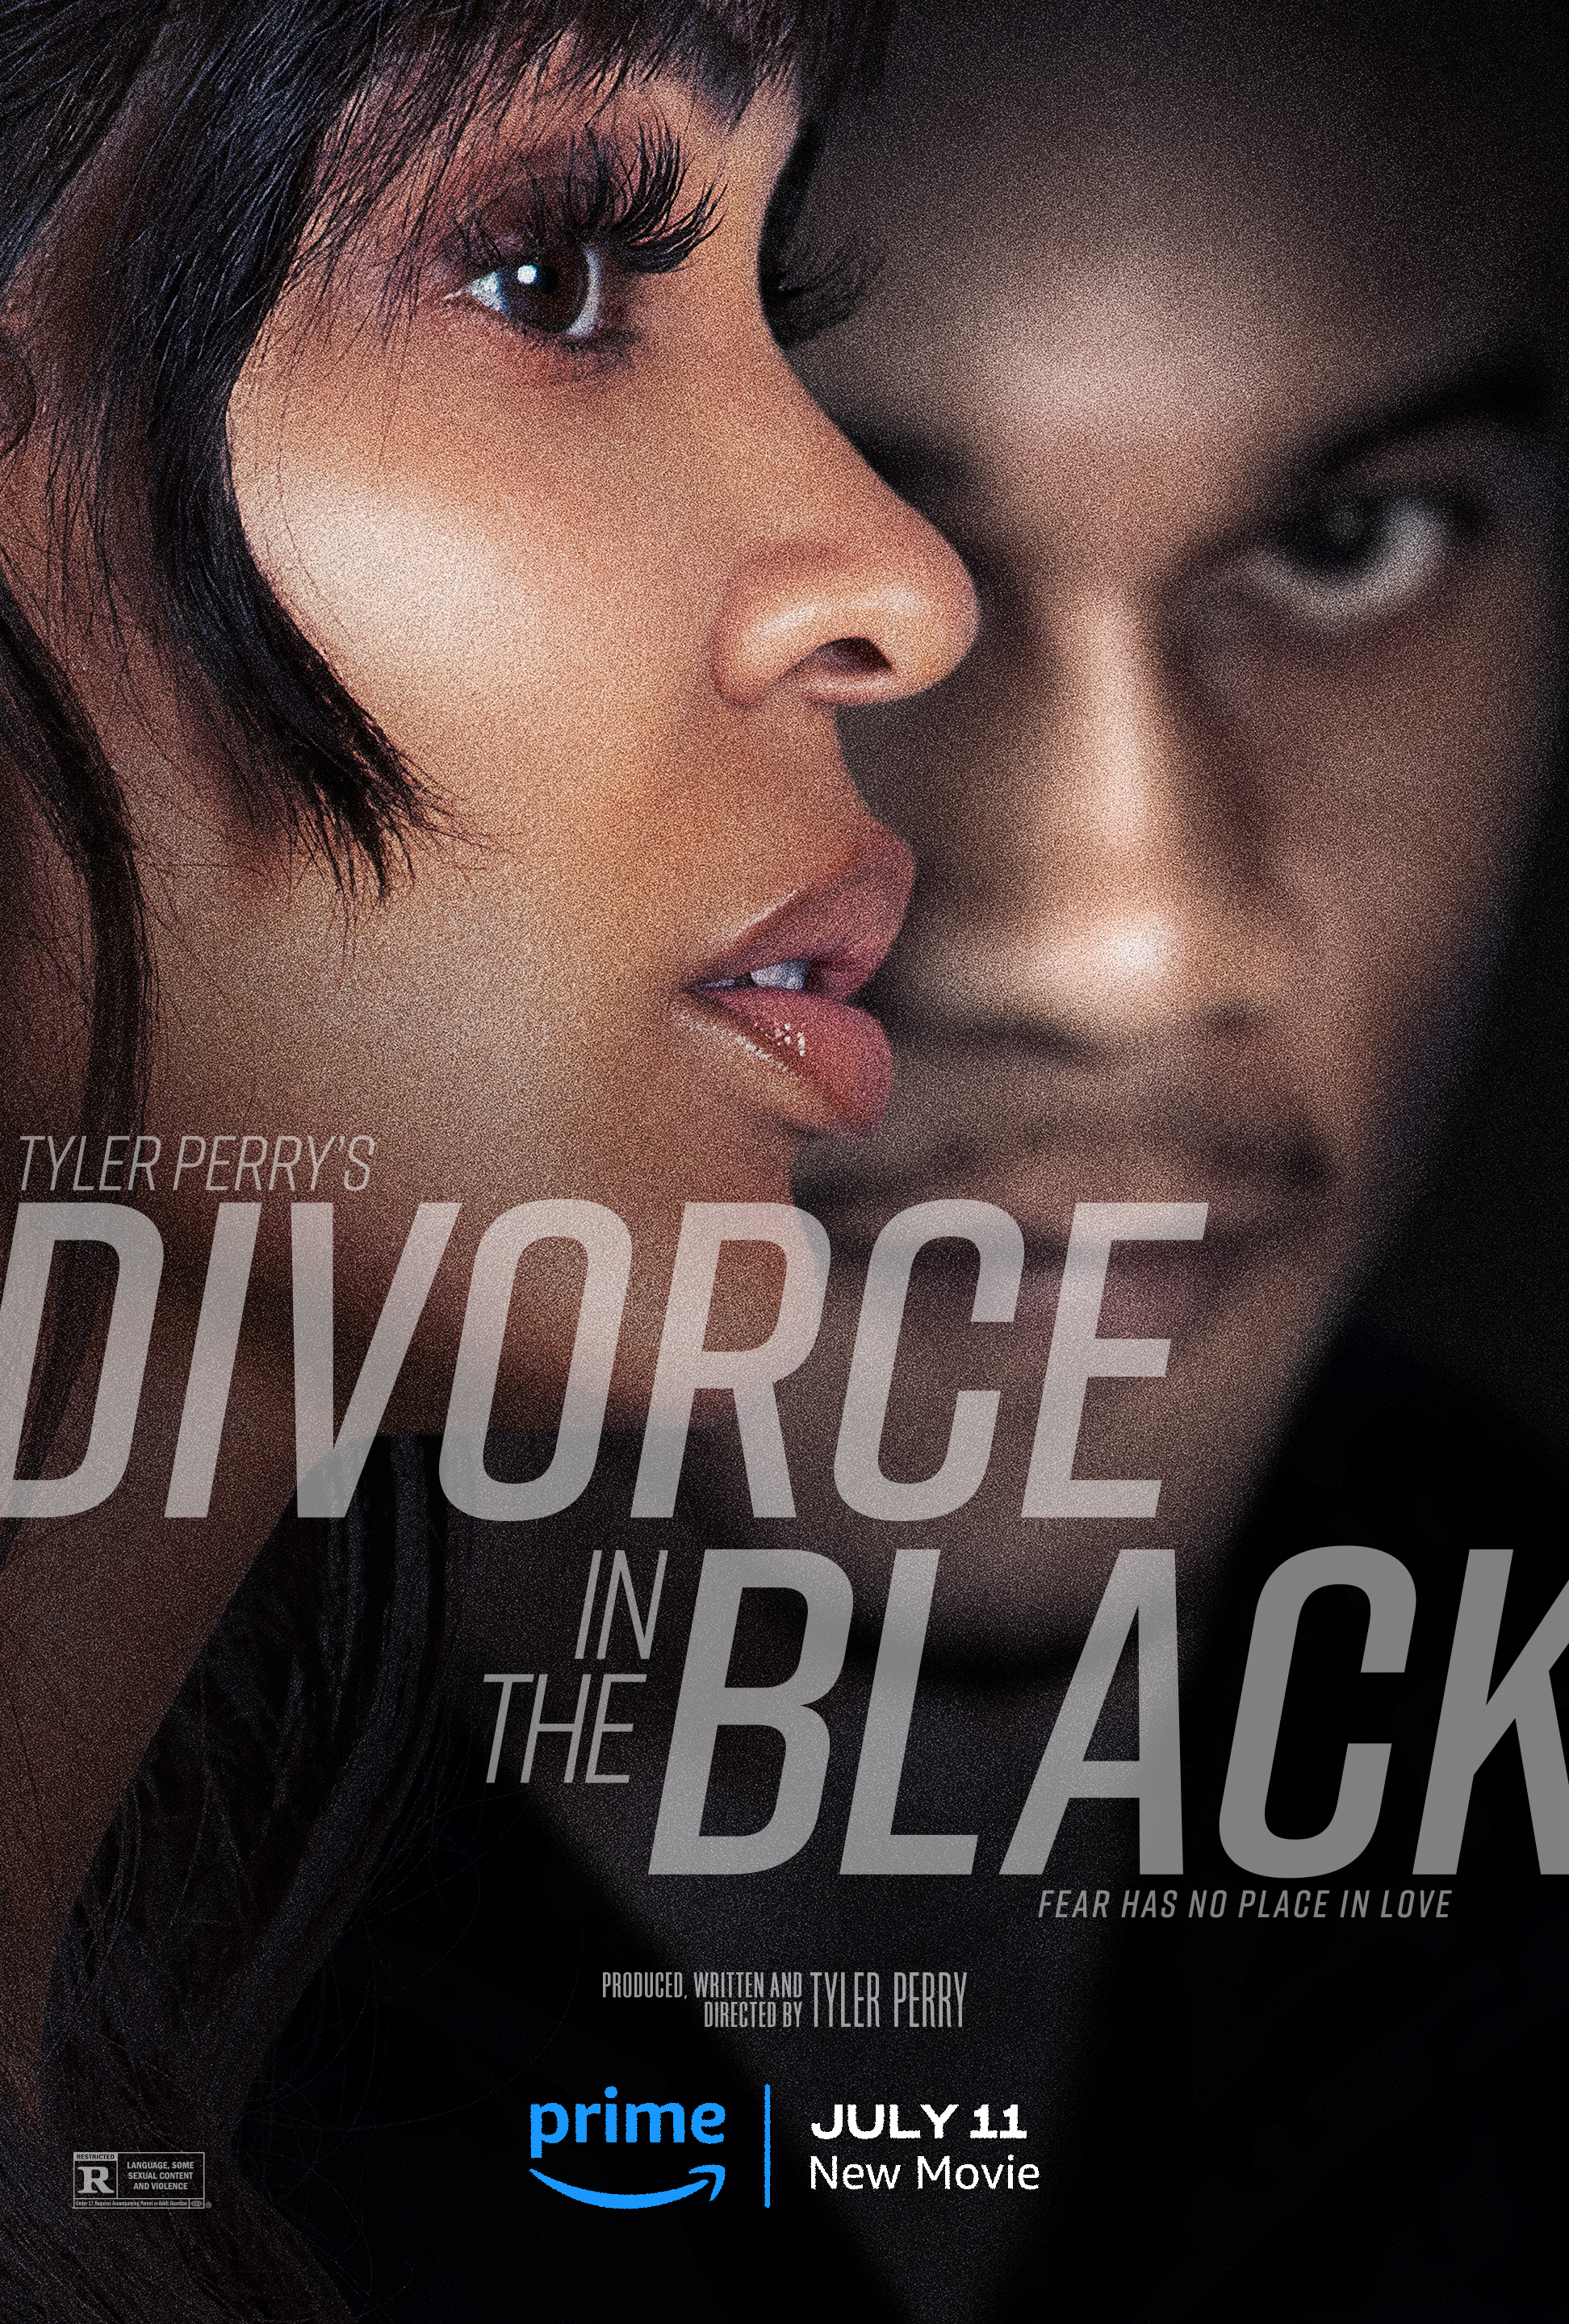 Tyler Perry’s Divorce In The Black